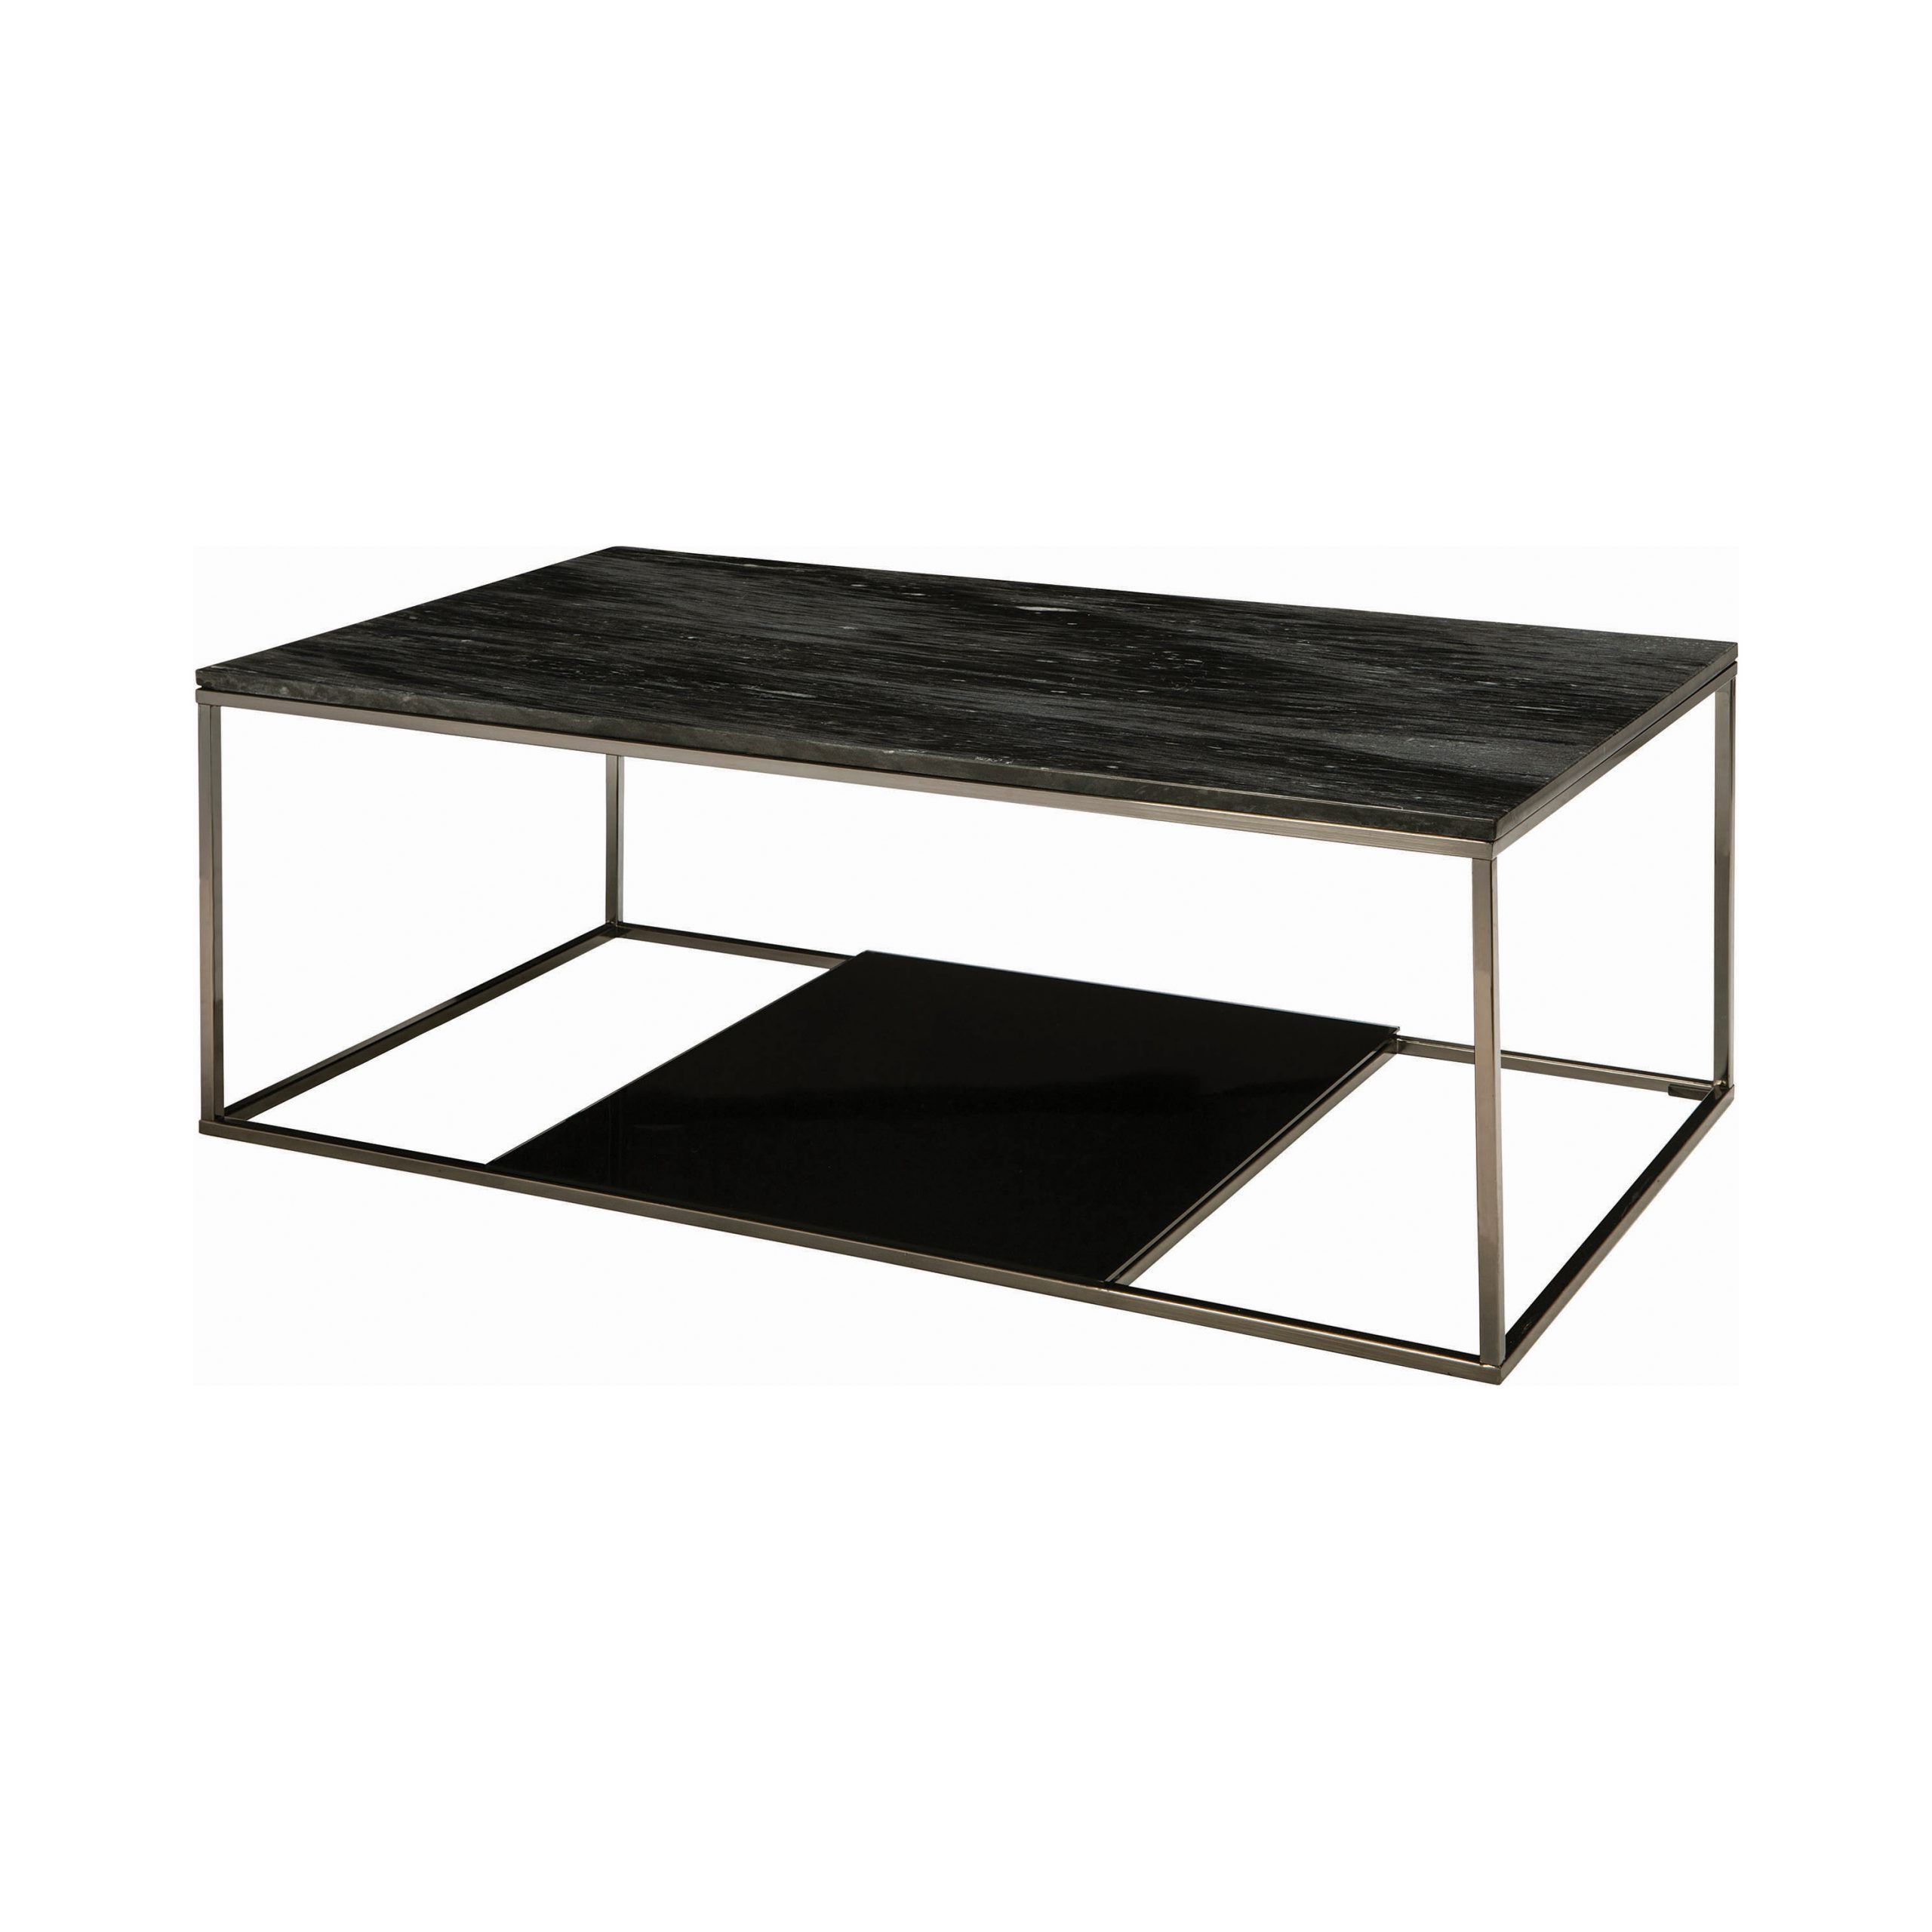 Schwartzman 1 Shelf Rectangular Coffee Table Black Regarding Well Known 1 Shelf Coffee Tables (Gallery 18 of 20)